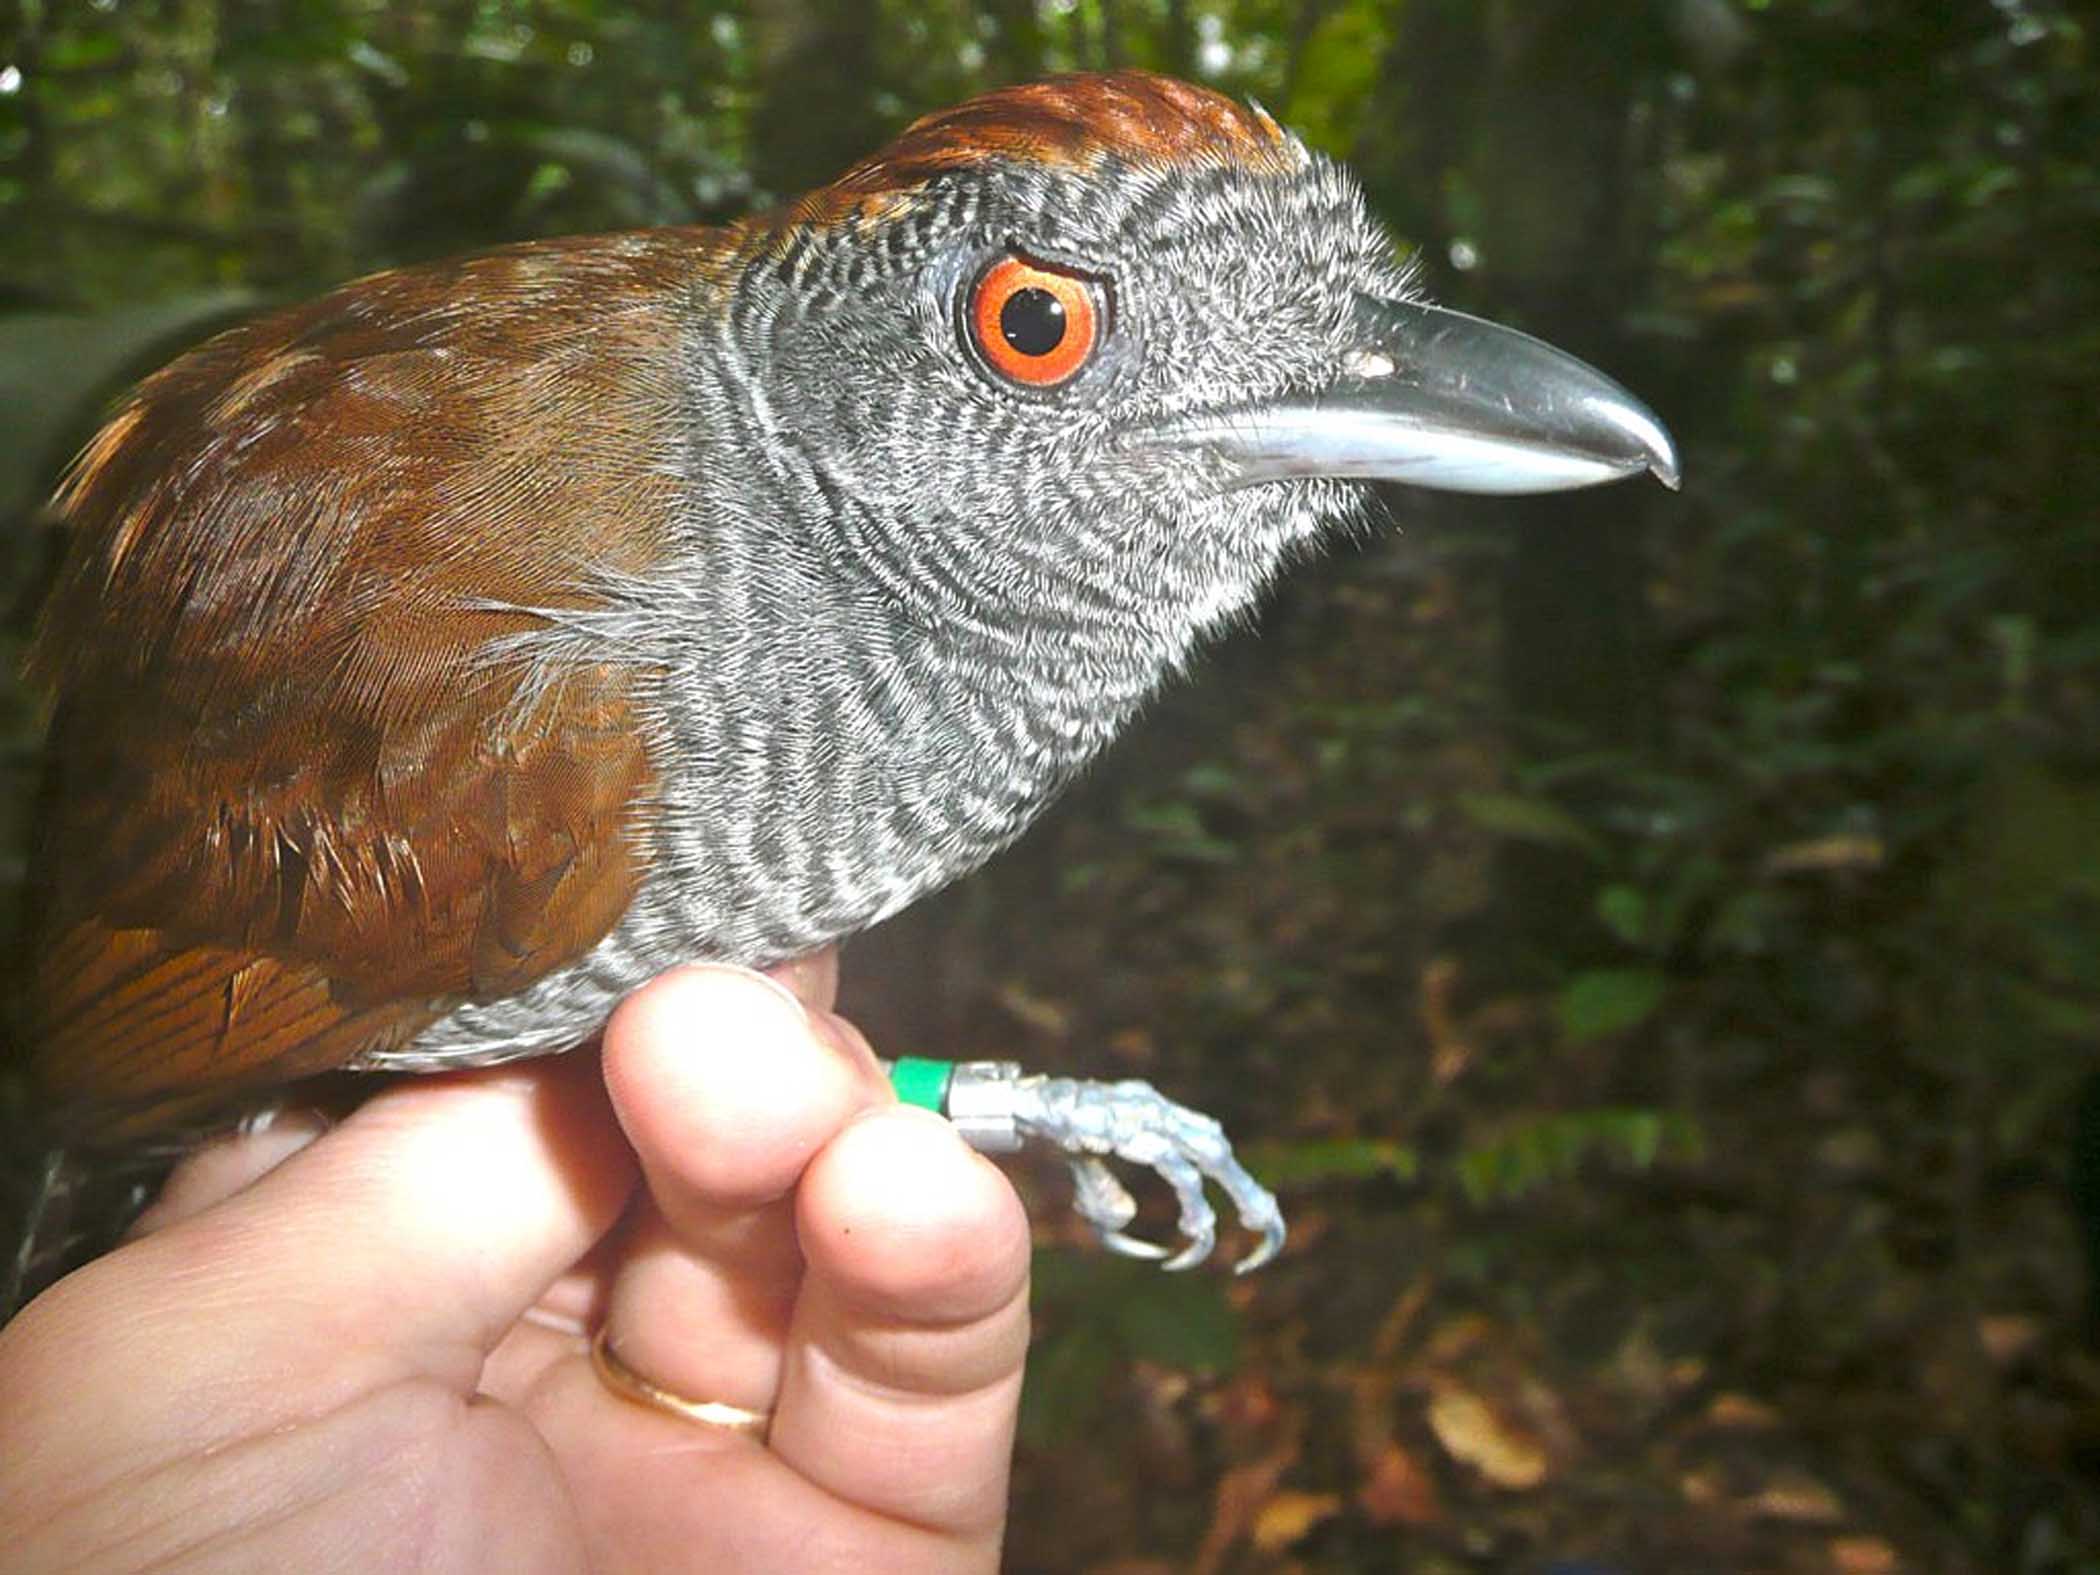  Extinct birds reappear in rainforest fragments in Brazil 